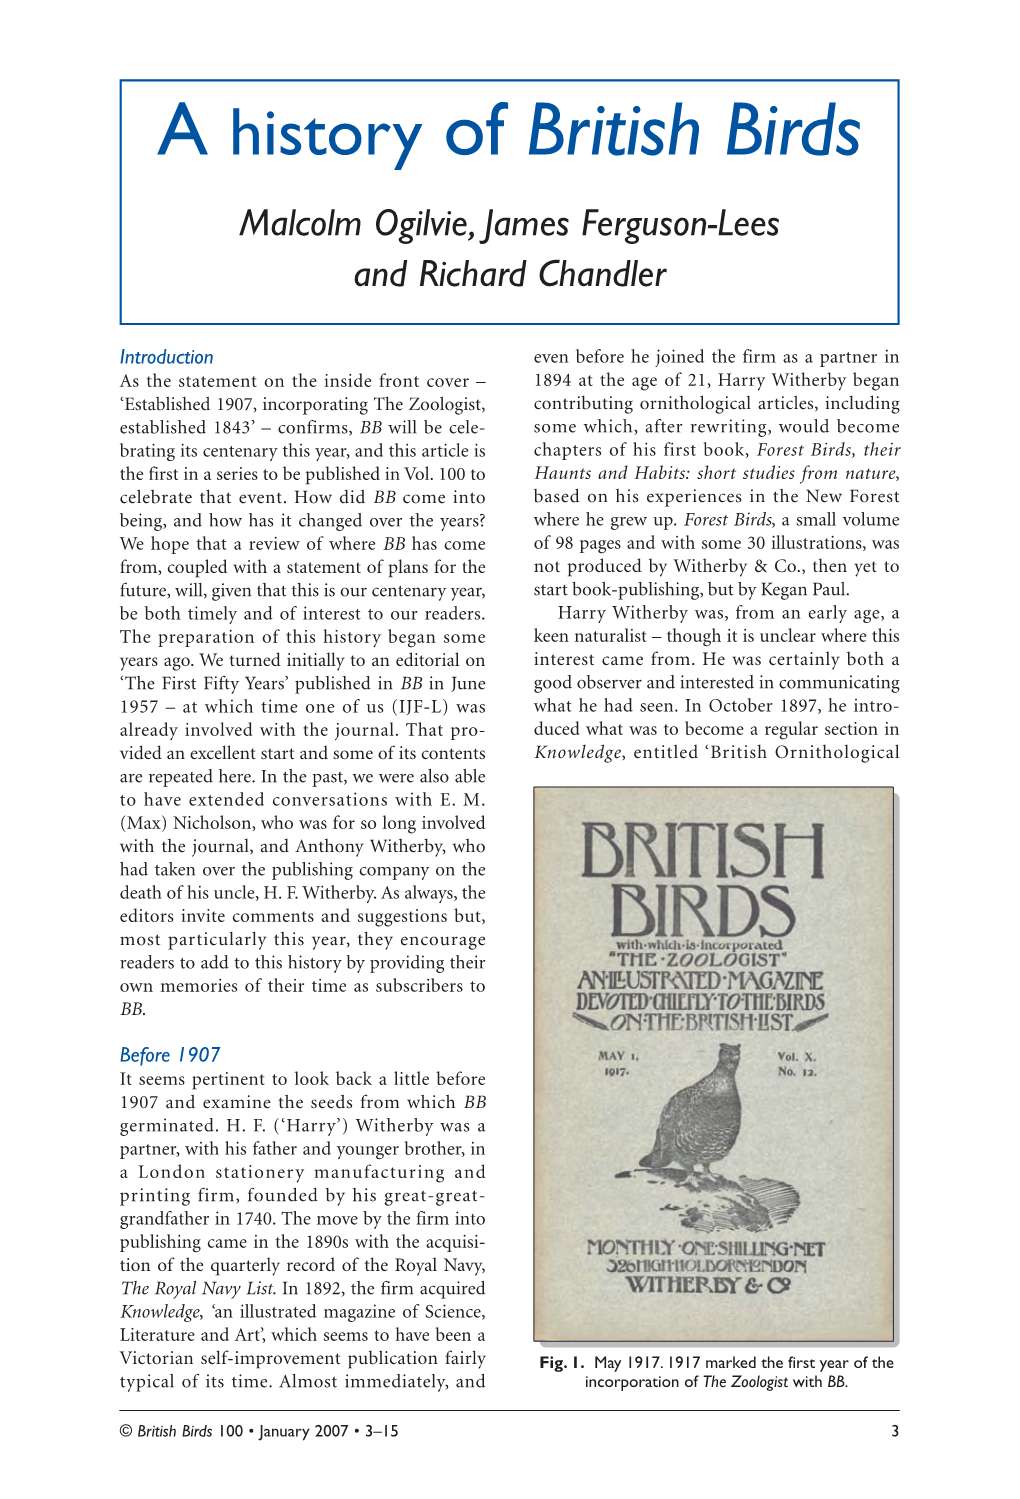 A History of British Birds Malcolm Ogilvie, James Ferguson-Lees and Richard Chandler